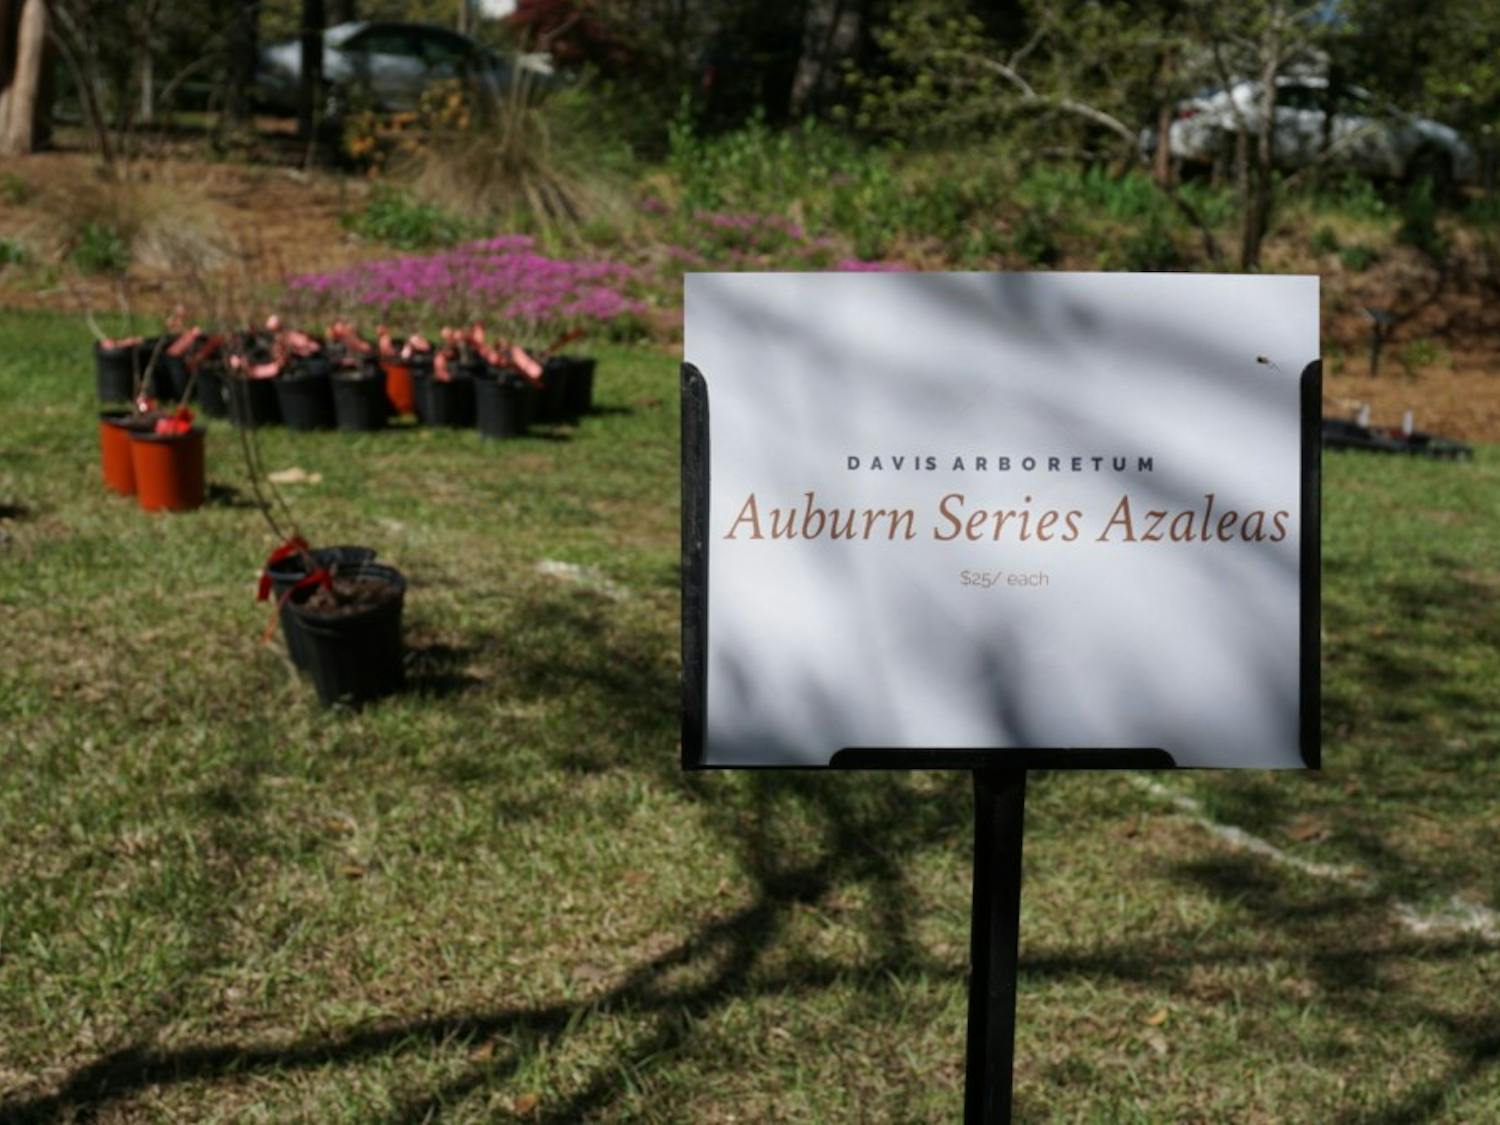 Auburn Series azaleas available for purchase at the Azalea&nbsp;Festival at Auburn University's Donald E. Davis Arboretum on Saturday, March 31, 2018, in Auburn, Ala.